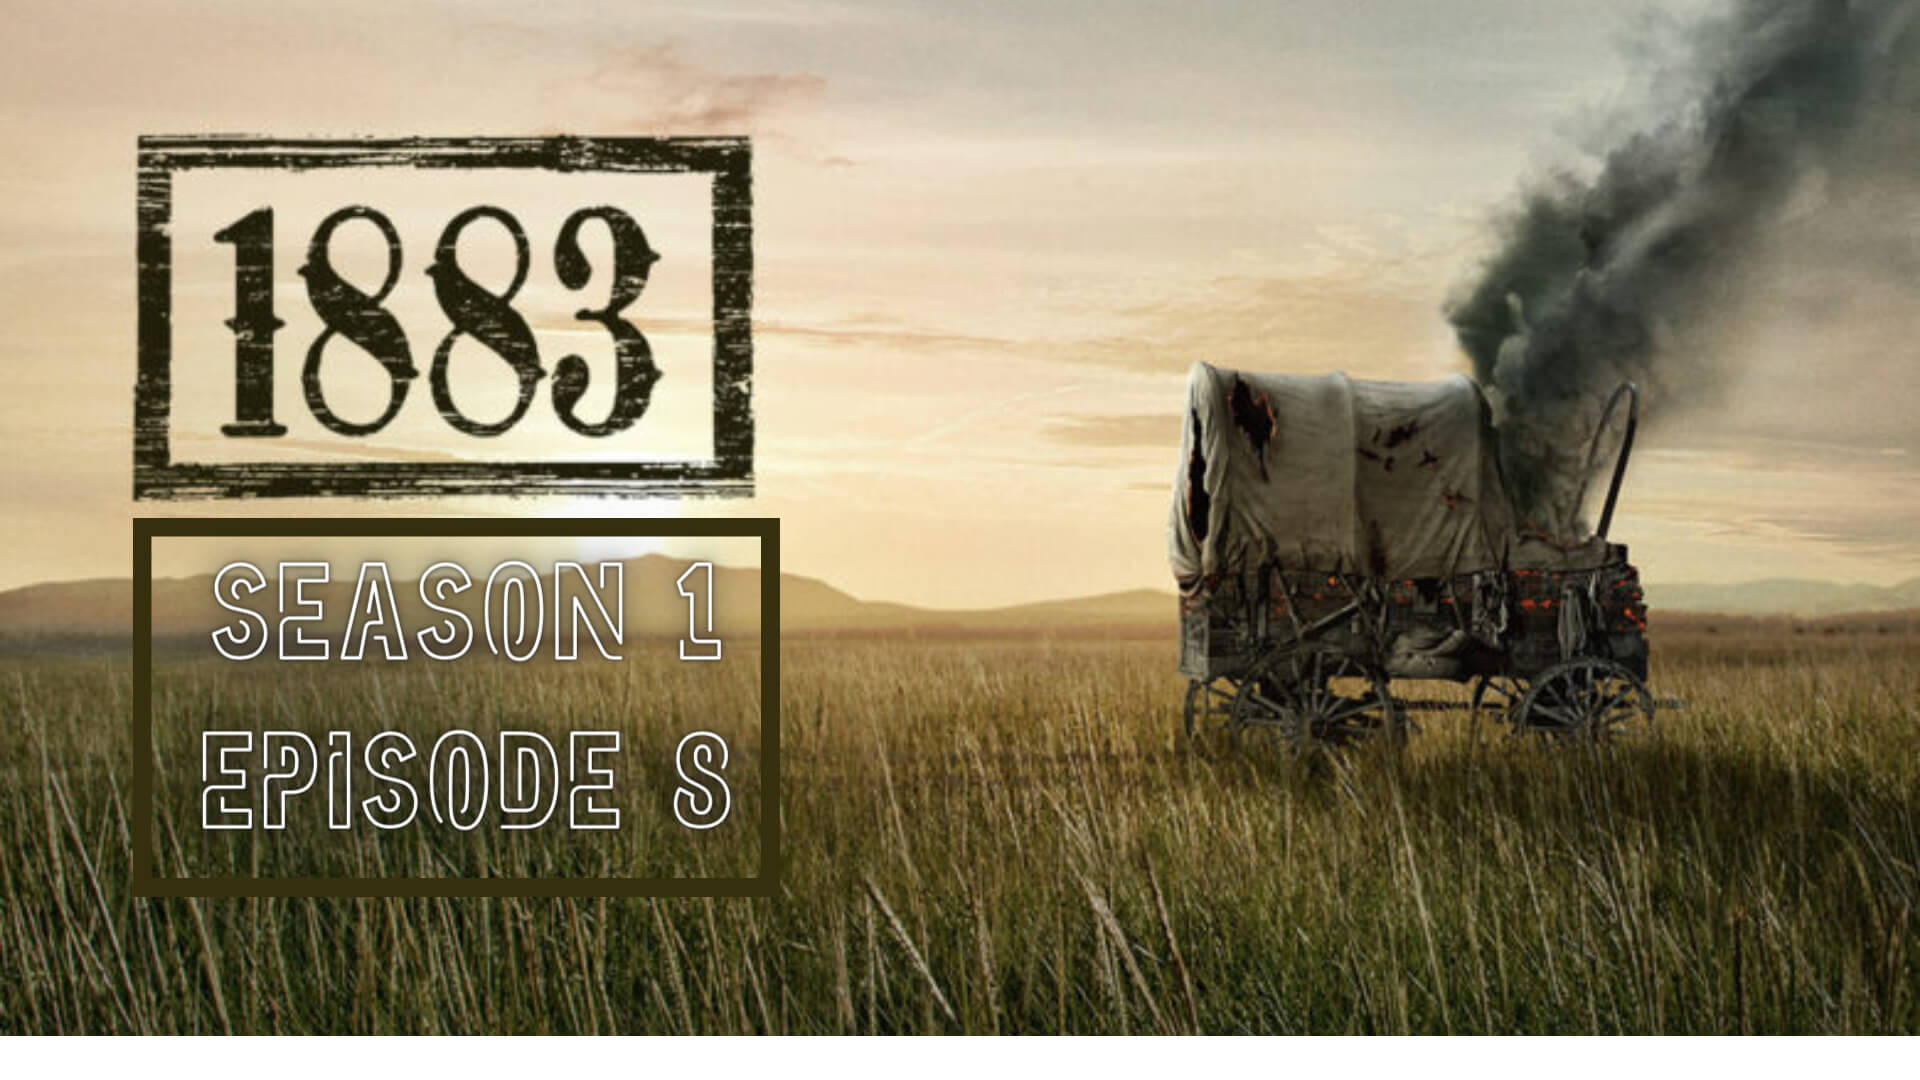 1883 Episode 8